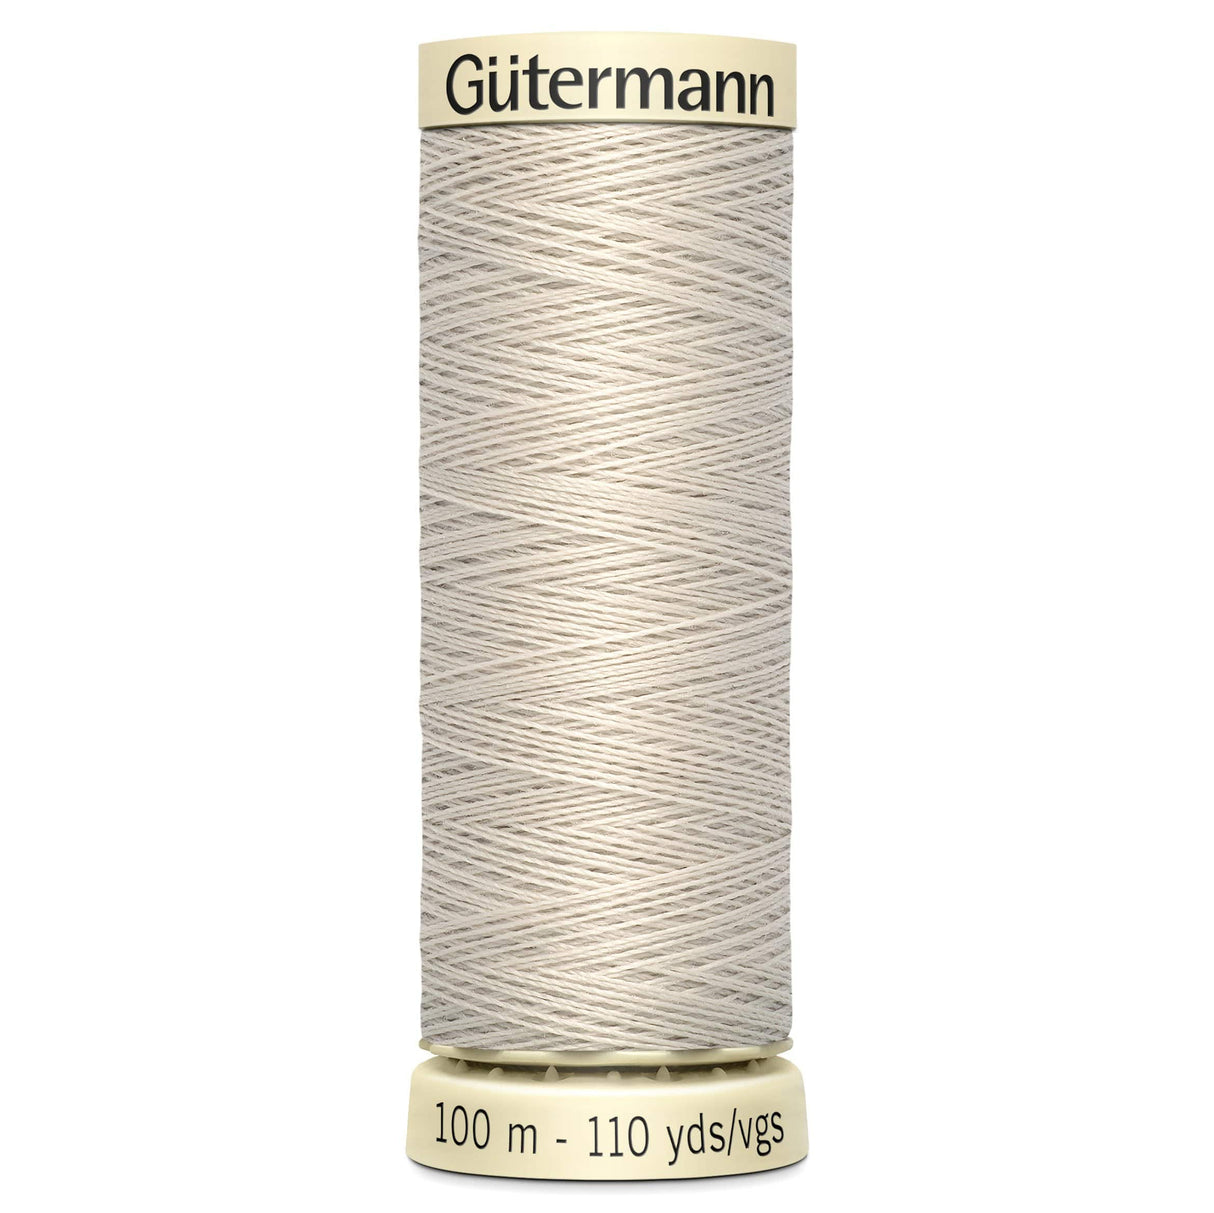 Groves Haberdashery 299 Gutermann Thread Sewing Cotton 100 m Black to Pink